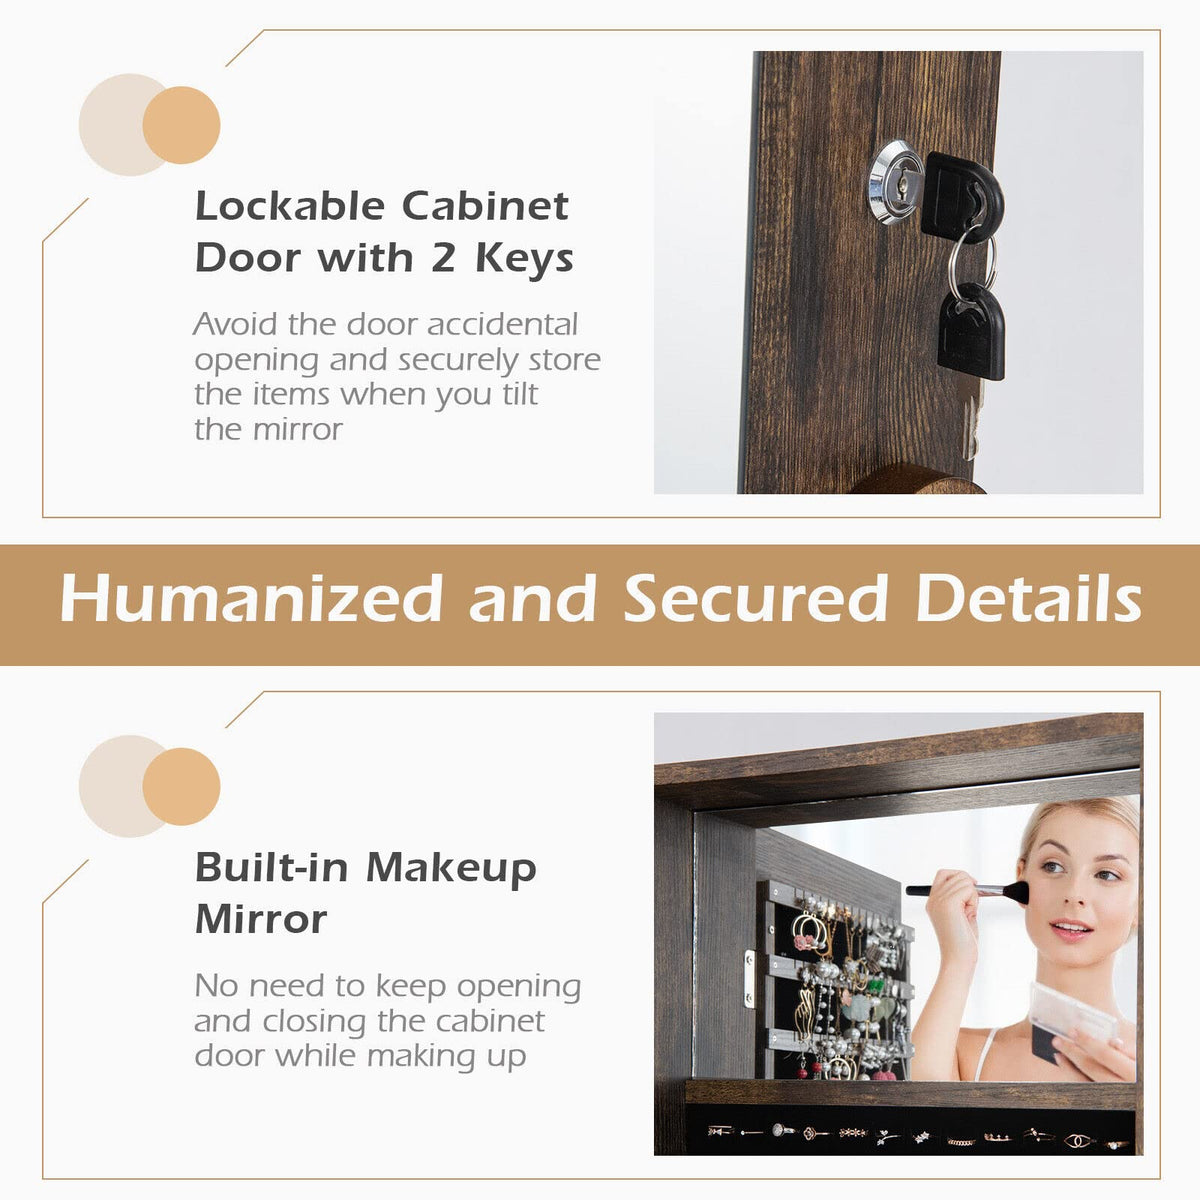 Giantex Mirror Jewelry Cabinet w/ Full Length Mirror, Jewelry Makeup Storage Cabinet w/ Lockable Door